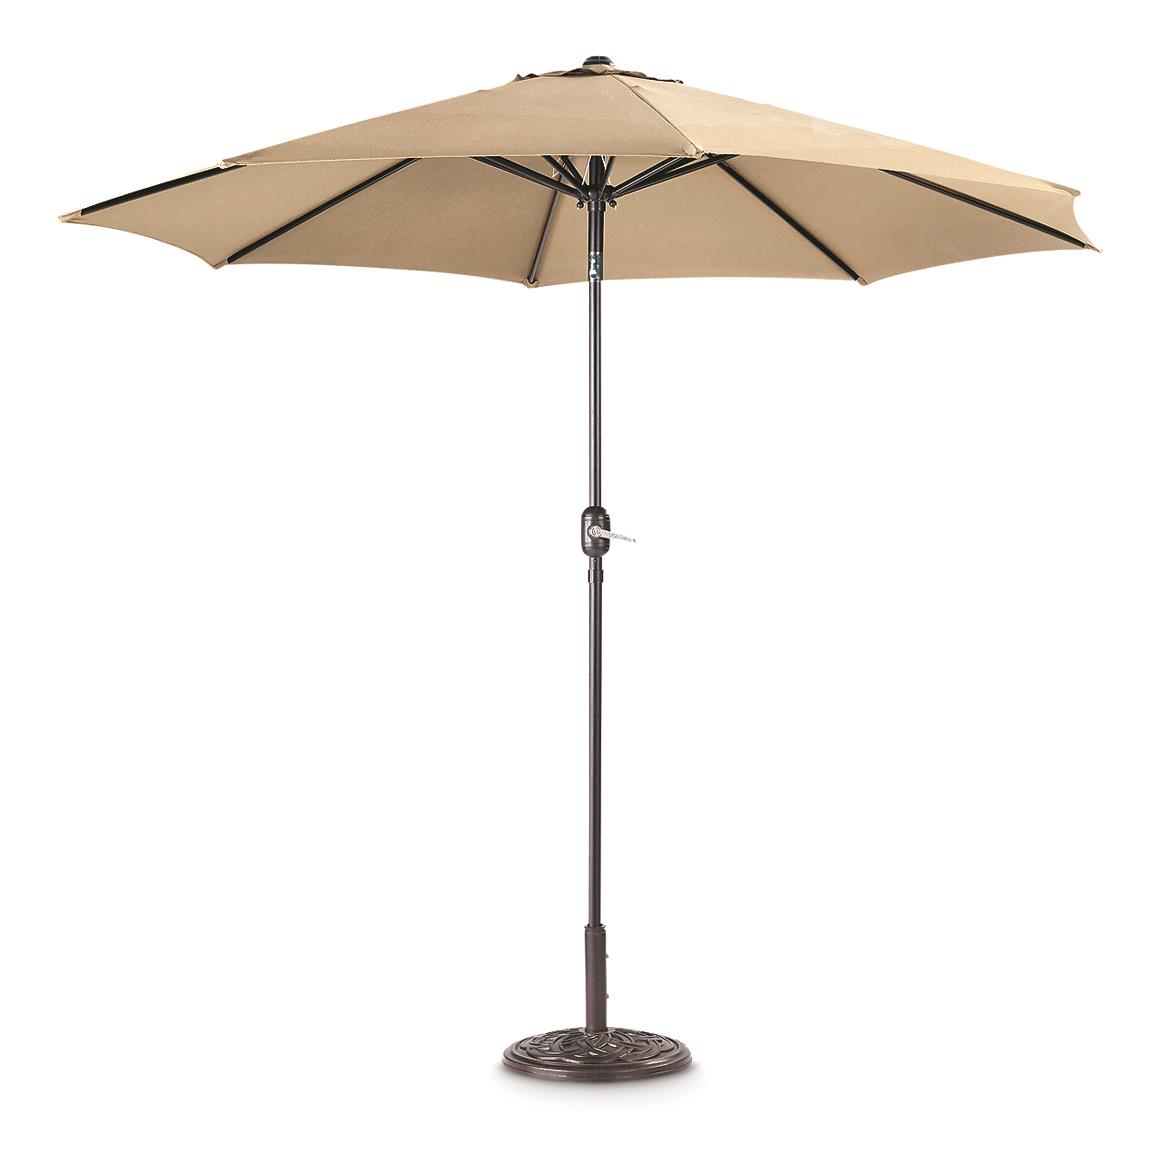 Green Details about   CASTLECREEK 8 Foot Half Round Outdoor Polyester Hand Crank Patio Umbrella 